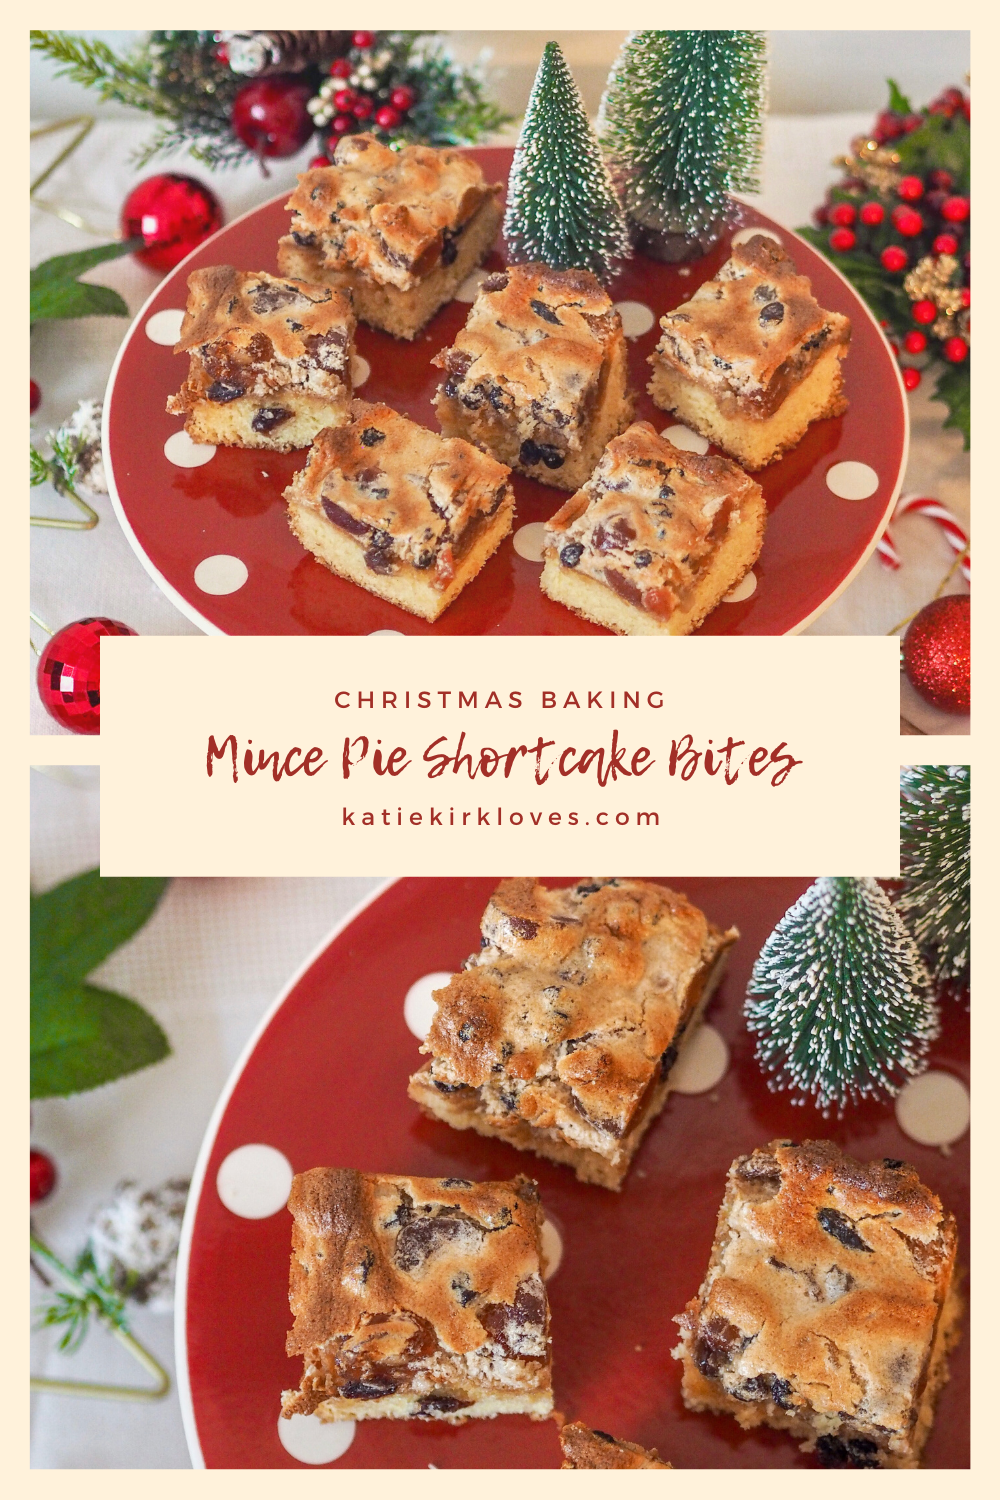 Mince Pie Shortcake Bites, Food Blogger, Katie Kirk Loves, UK Blogger, Christmas Recipe, Christmas Baking, Homemade Christmas Gifts, Home Baking, UK Baking Blog, UK Recipe